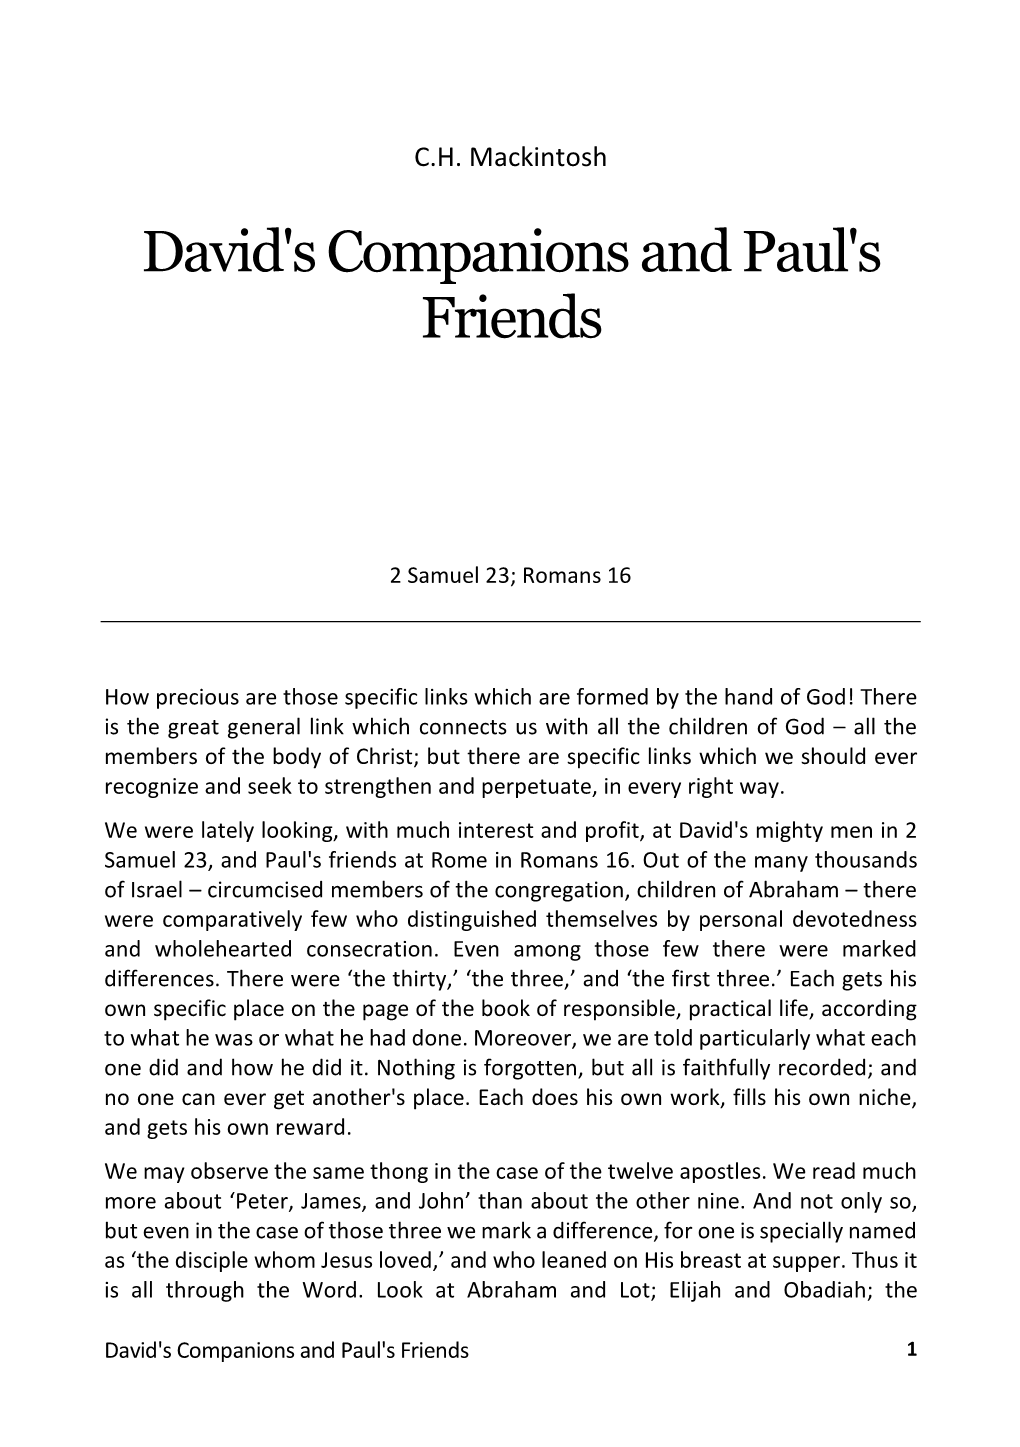 David's Companions and Paul's Friends